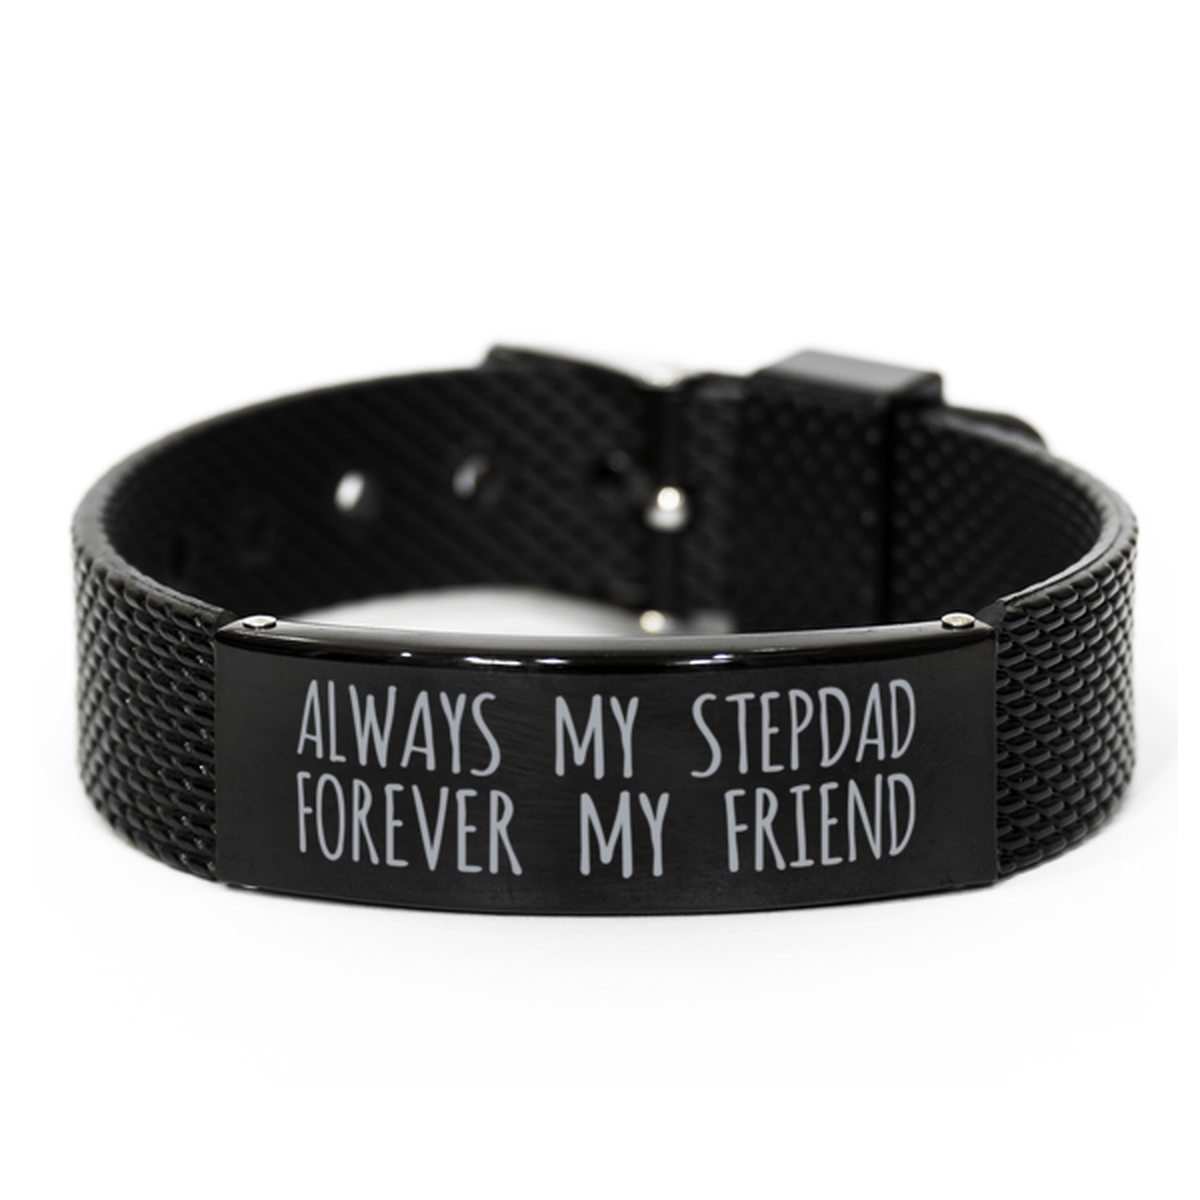 Inspirational Stepdad Black Shark Mesh Bracelet, Always My Stepdad Forever My Friend, Best Birthday Gifts for Family Friends